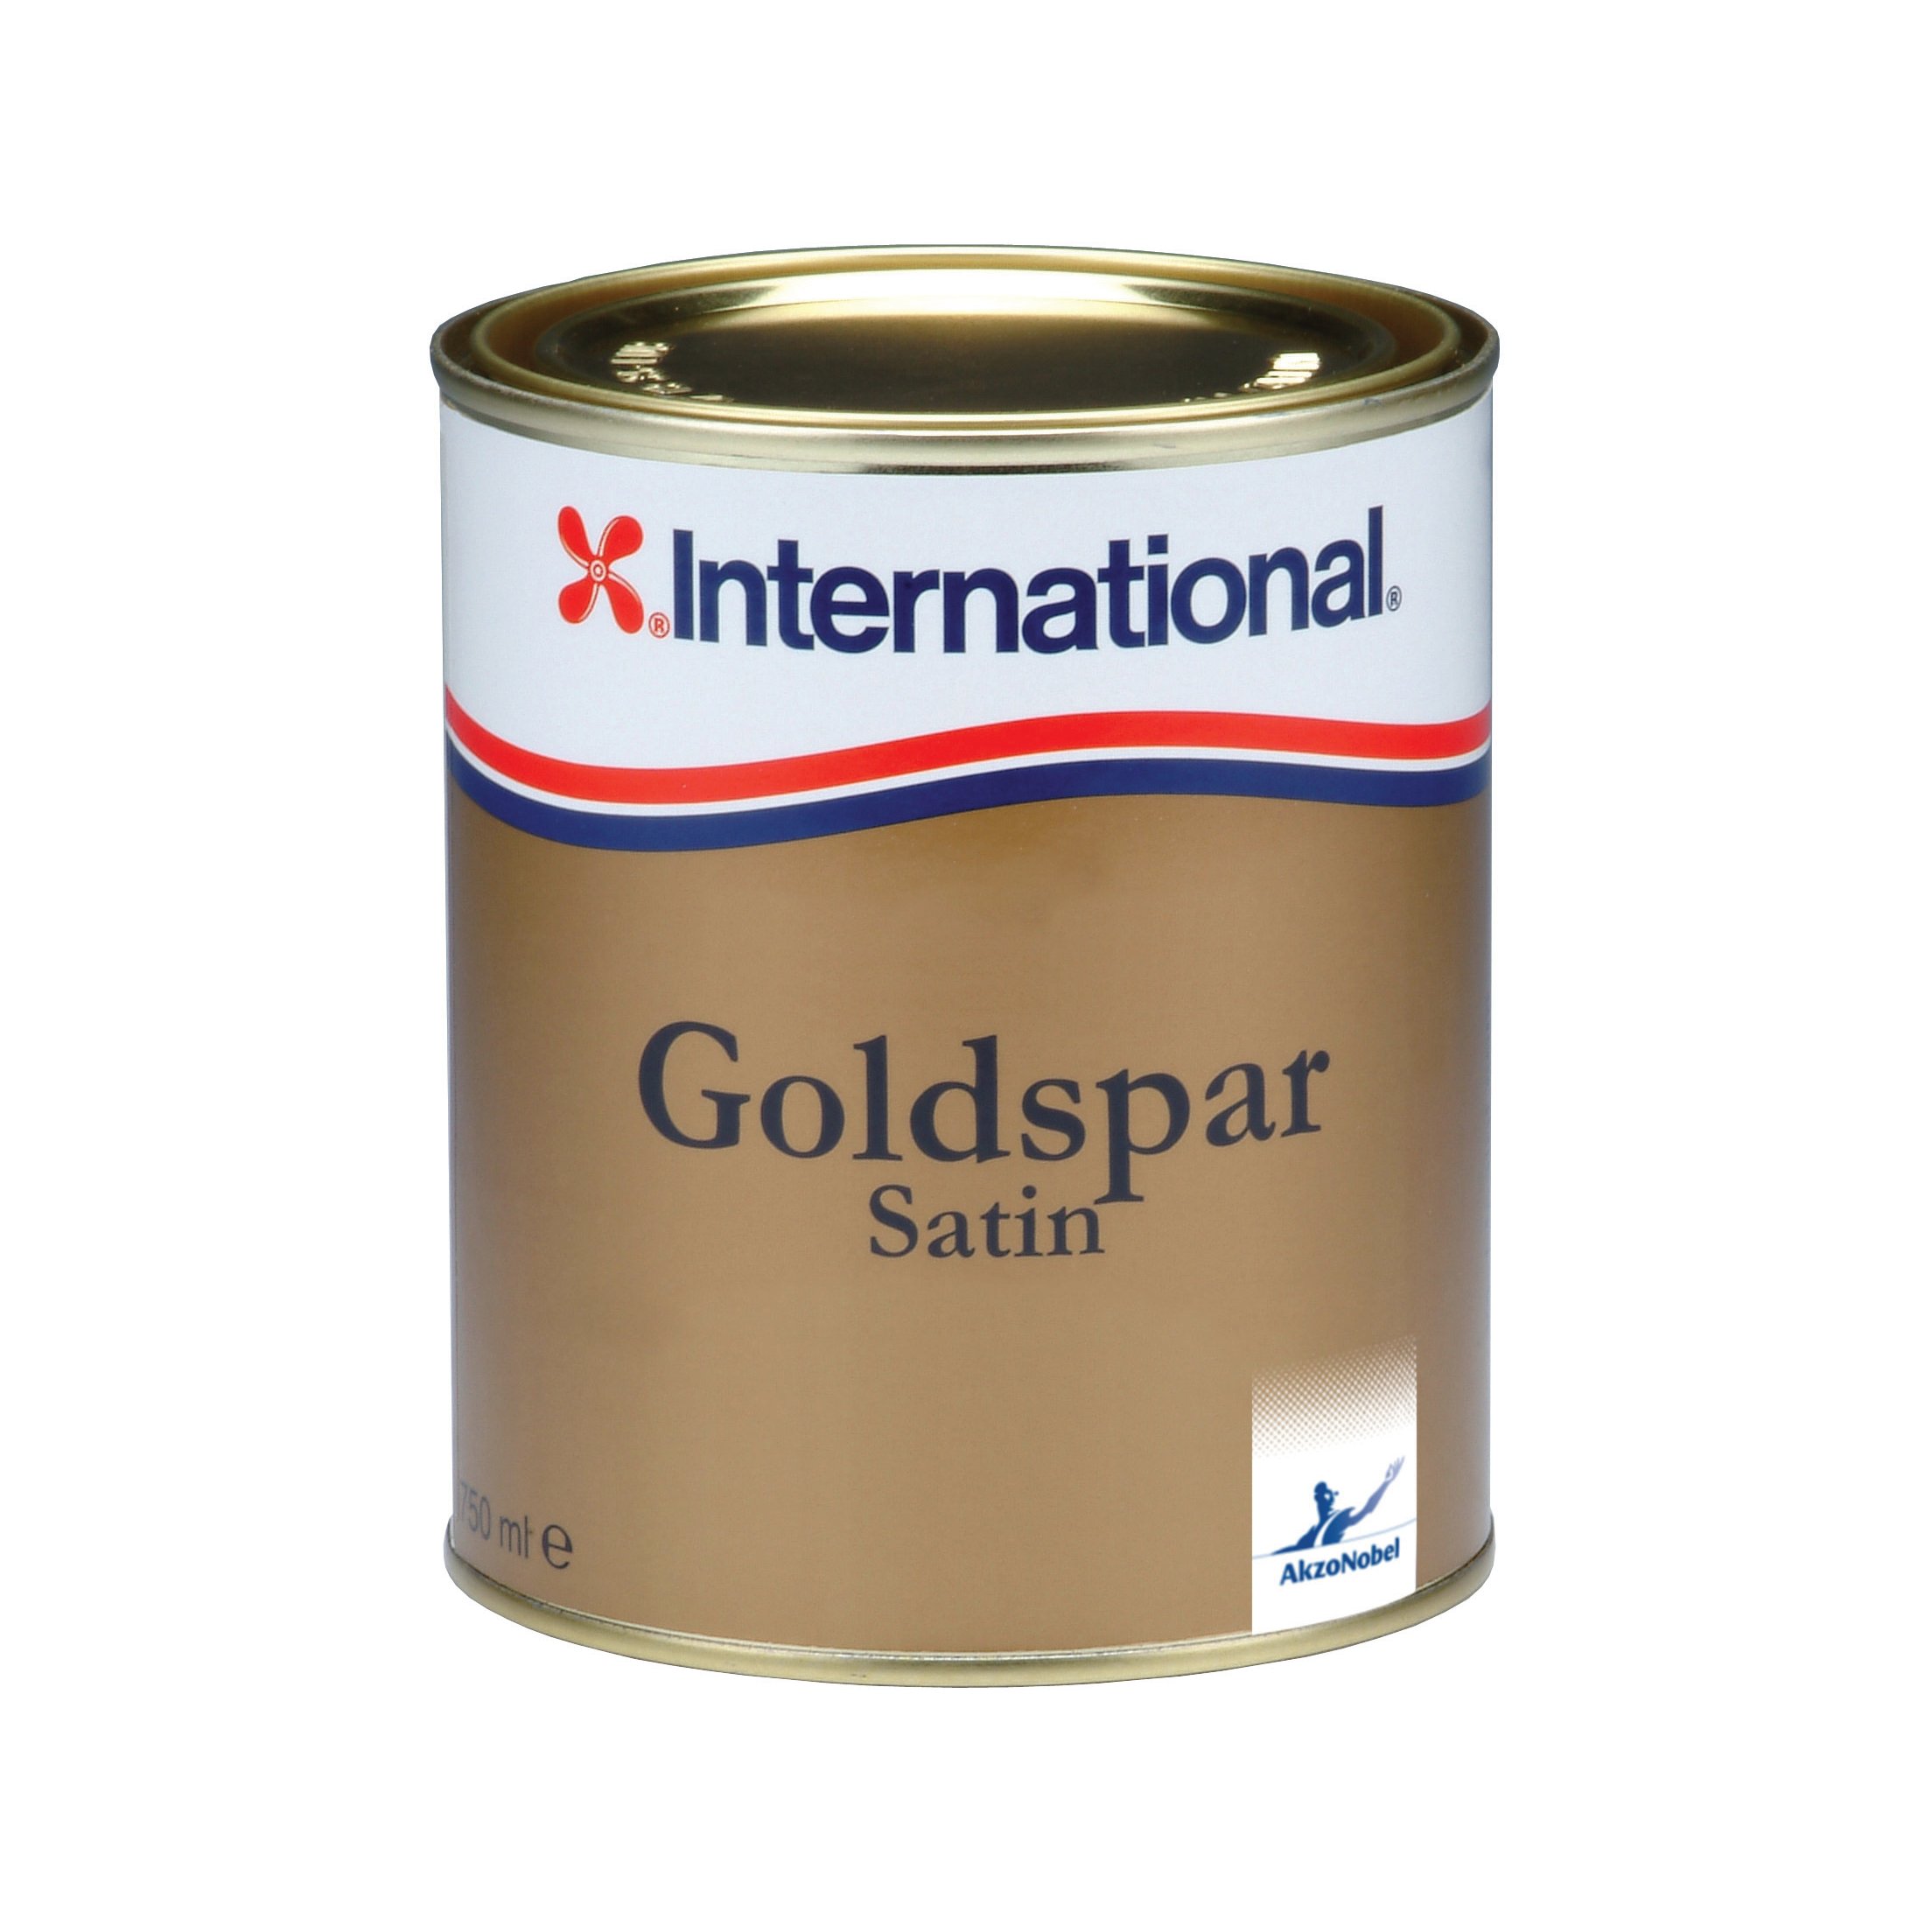 International Goldspar Satin hoogglanzende vernis - 750ml